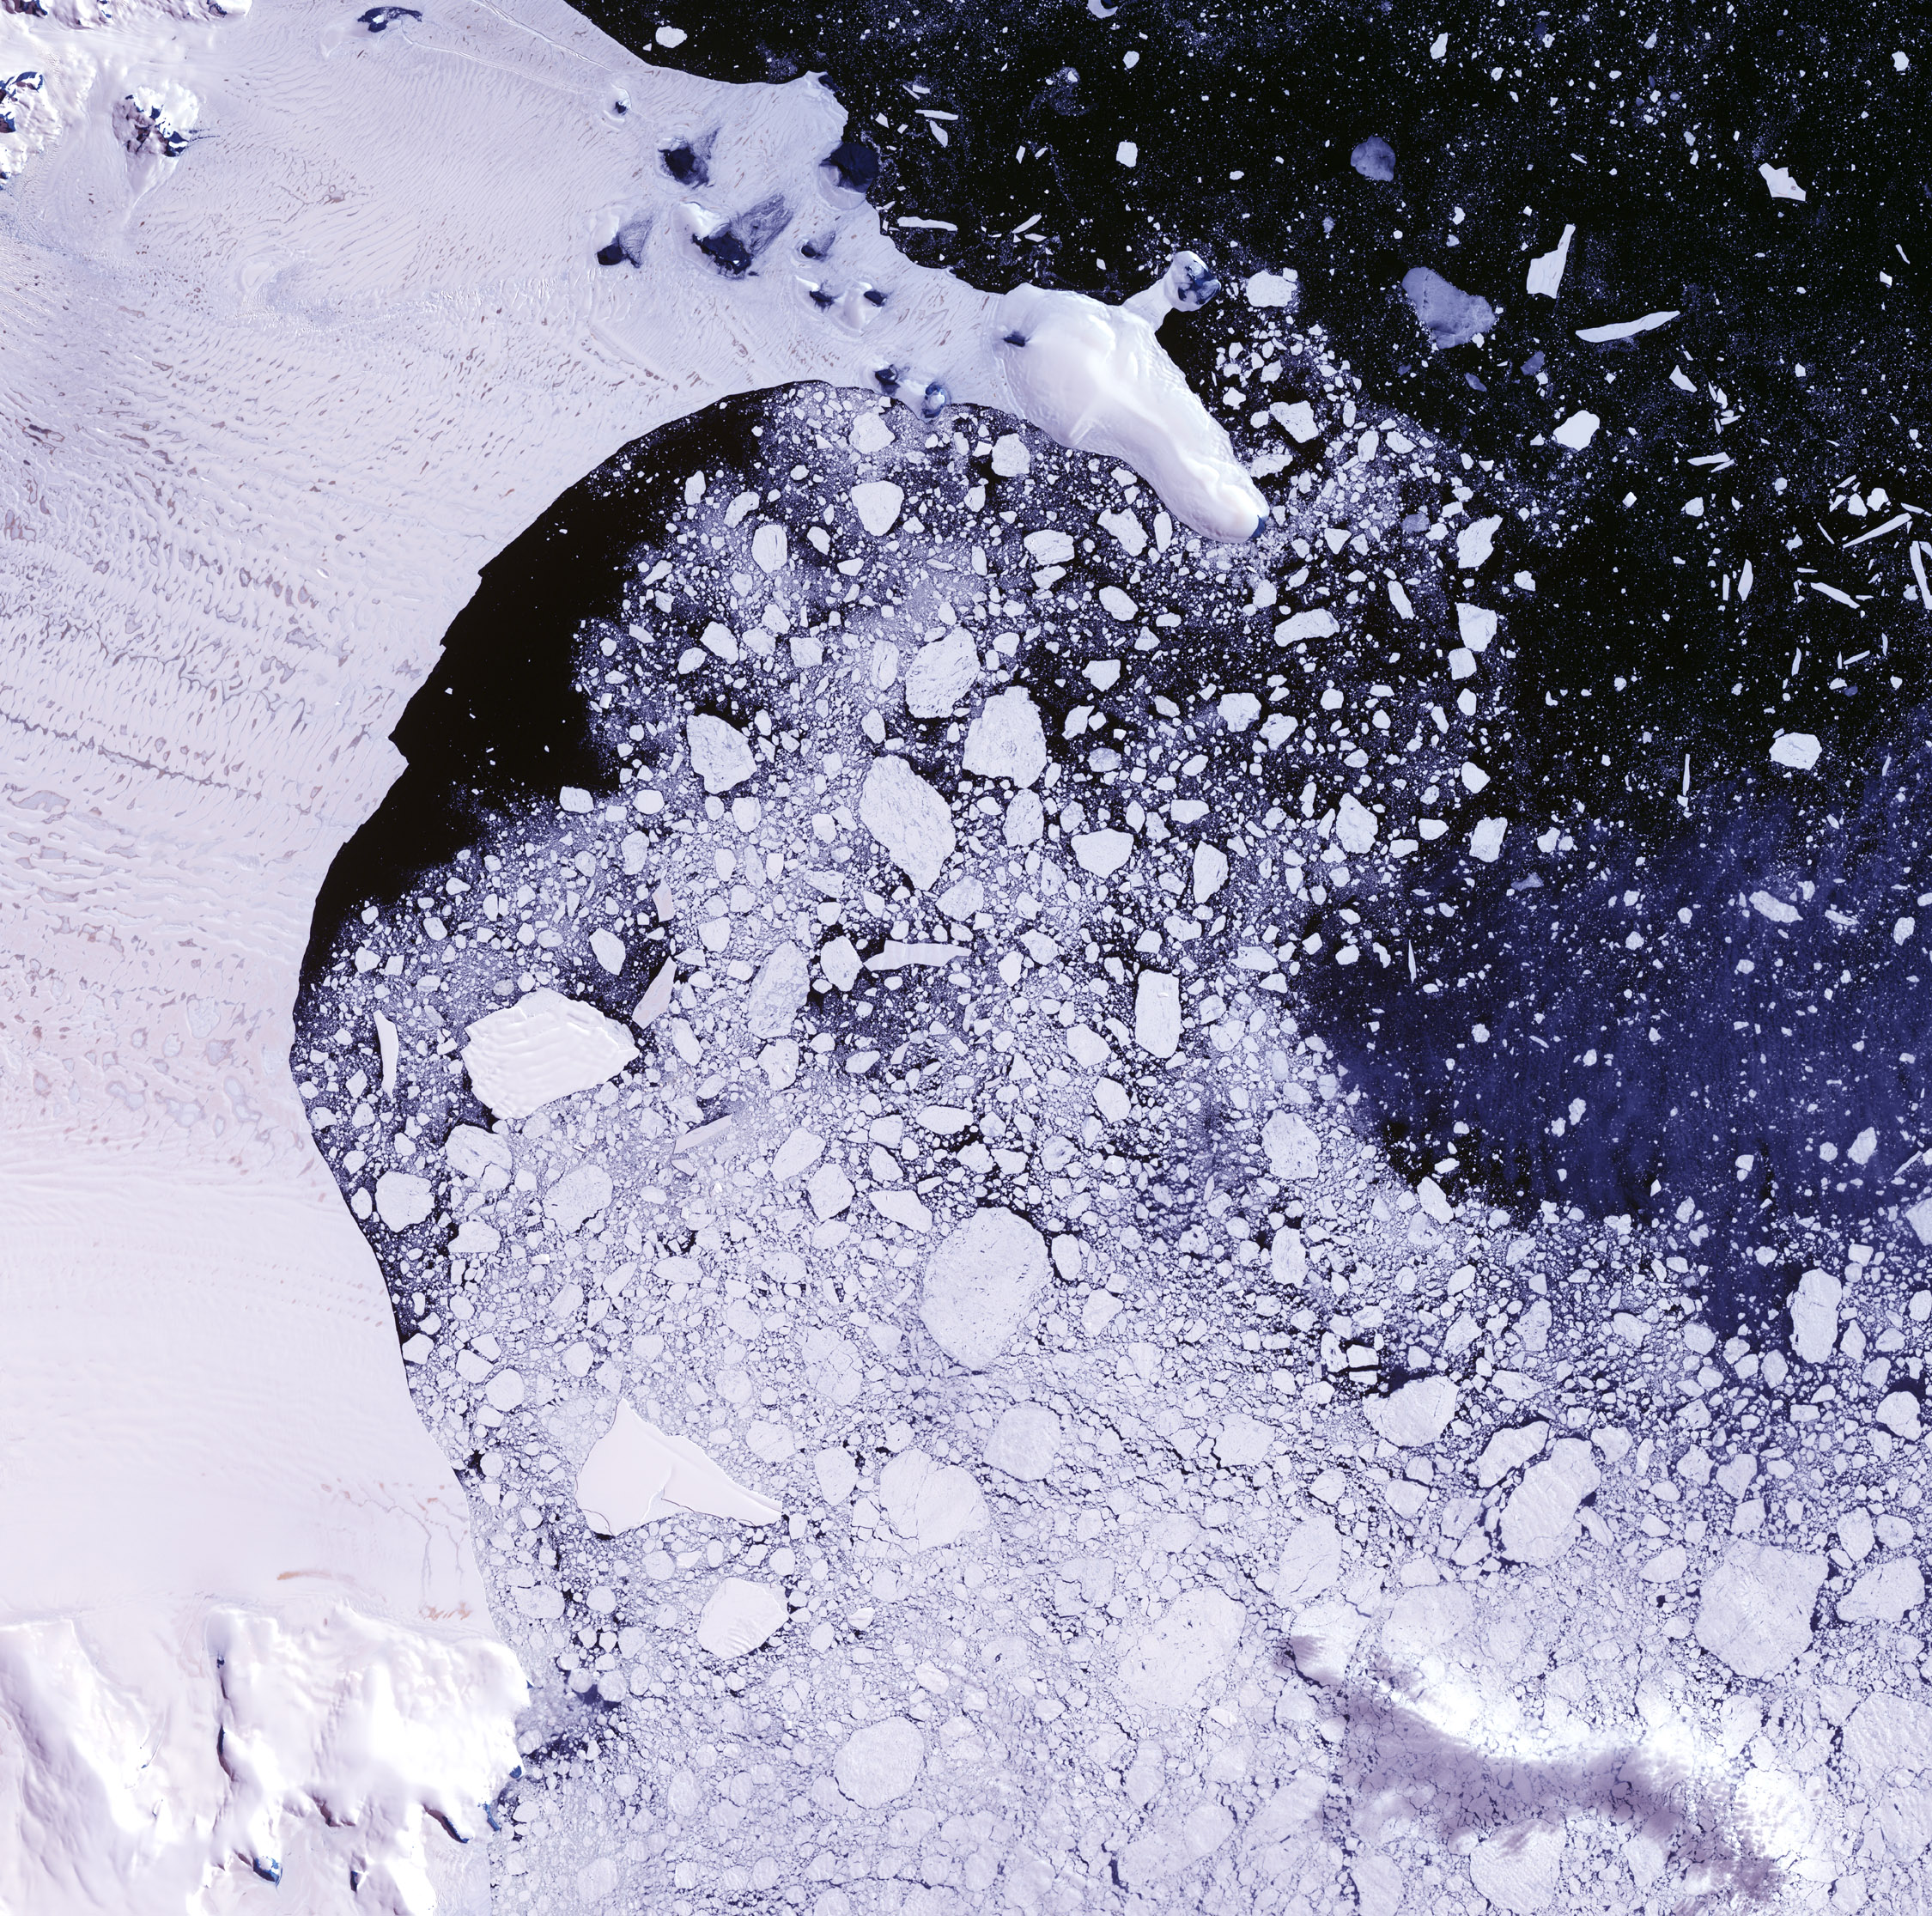 Larsen Ice Shelf, Antarctica - related image preview